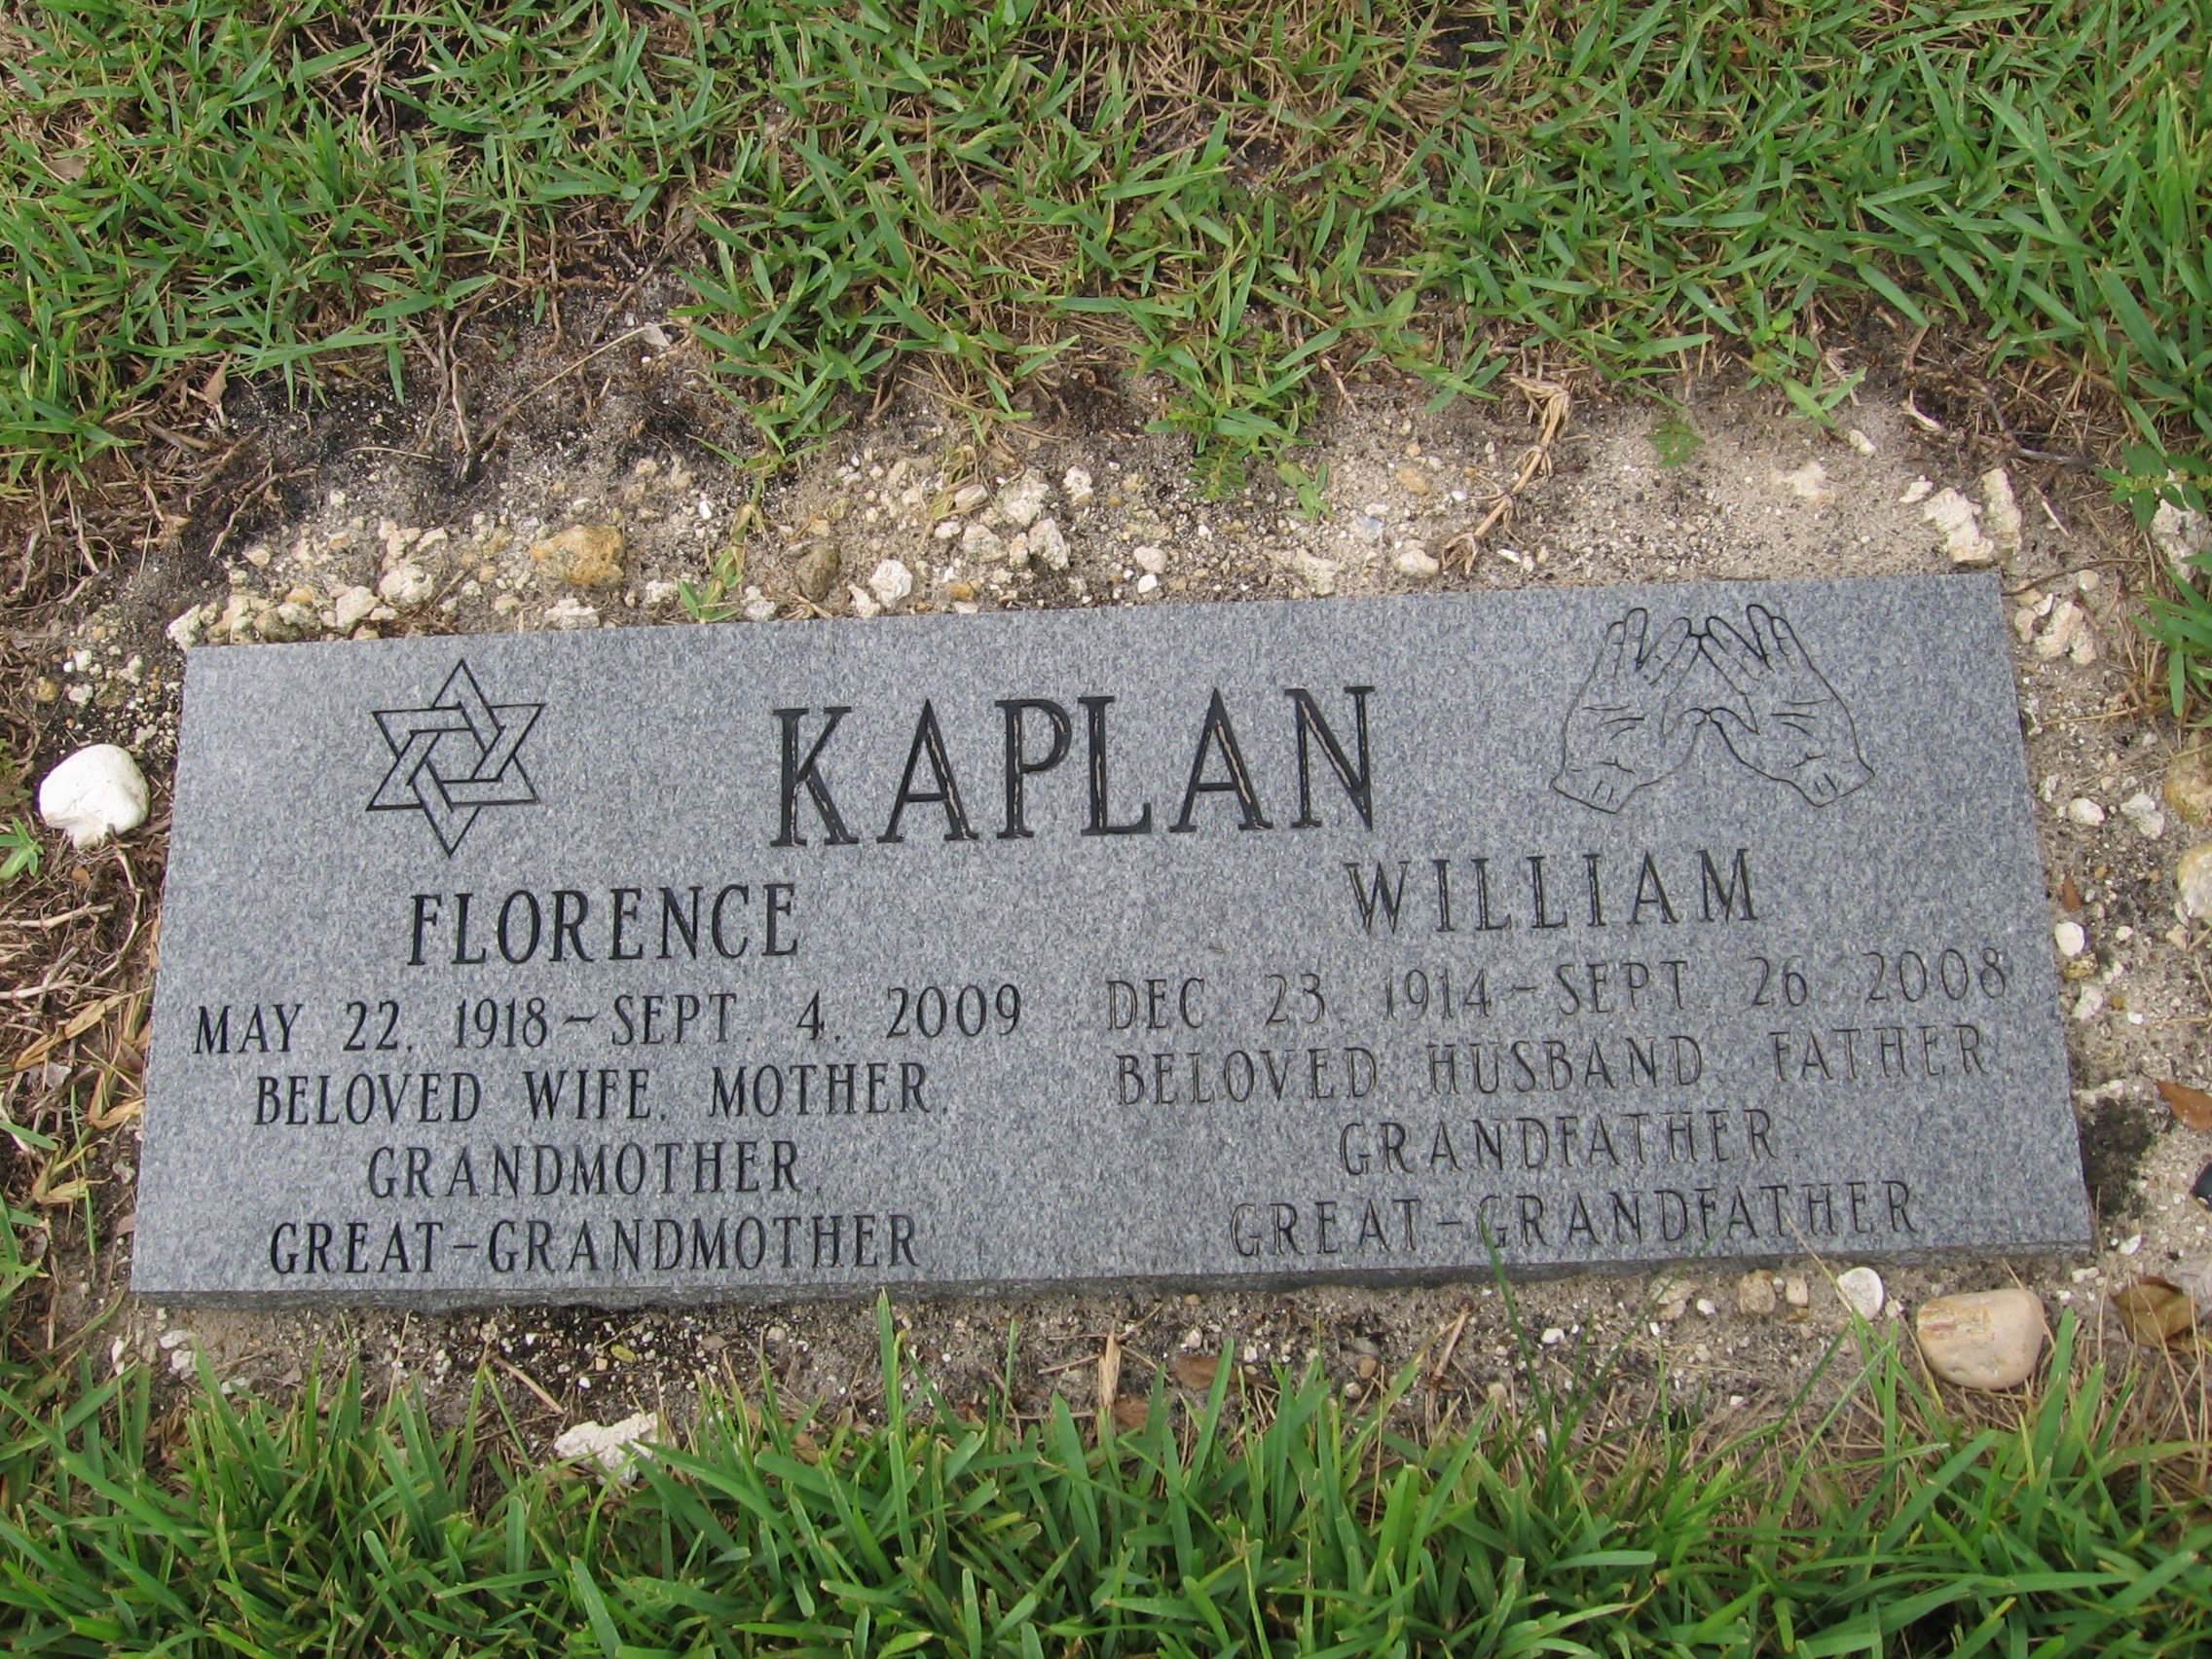 William Kaplan